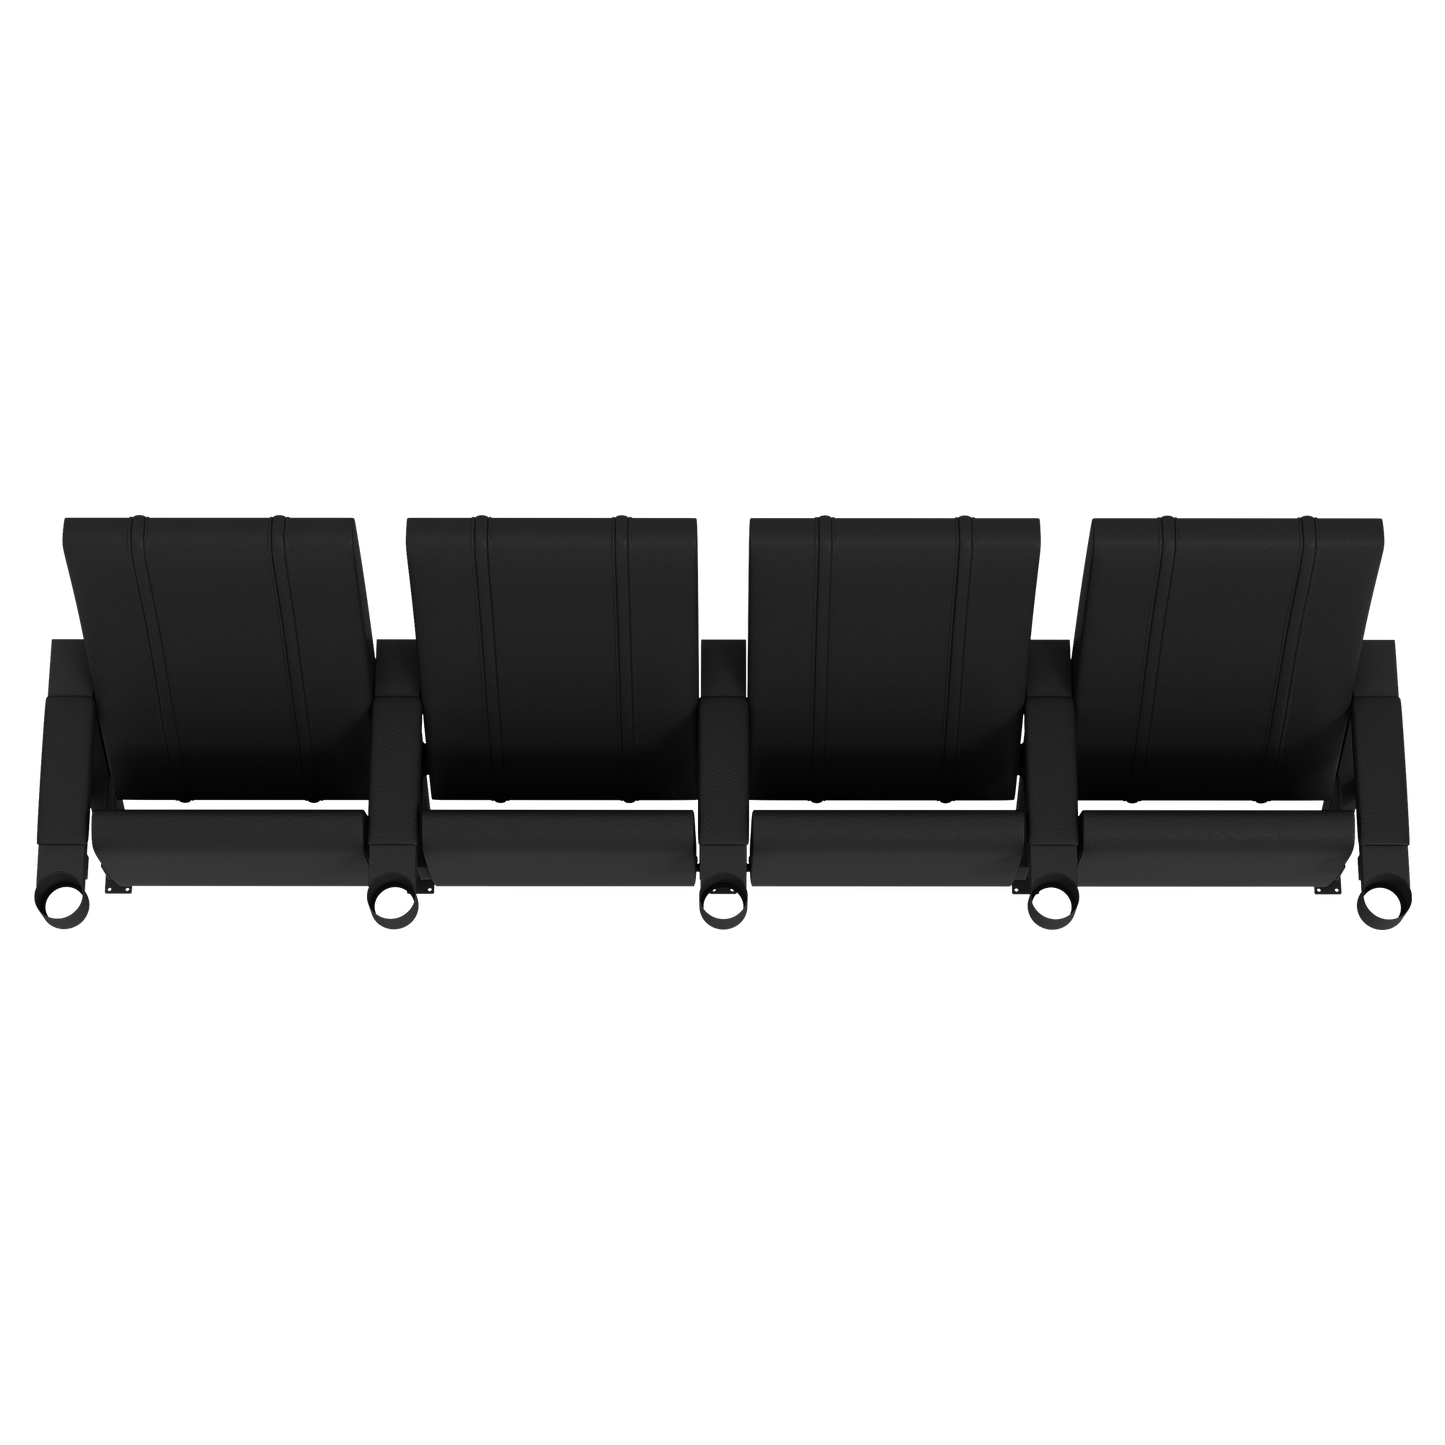 SuiteMax 3.5 VIP Seats with Dallas Stars Logo